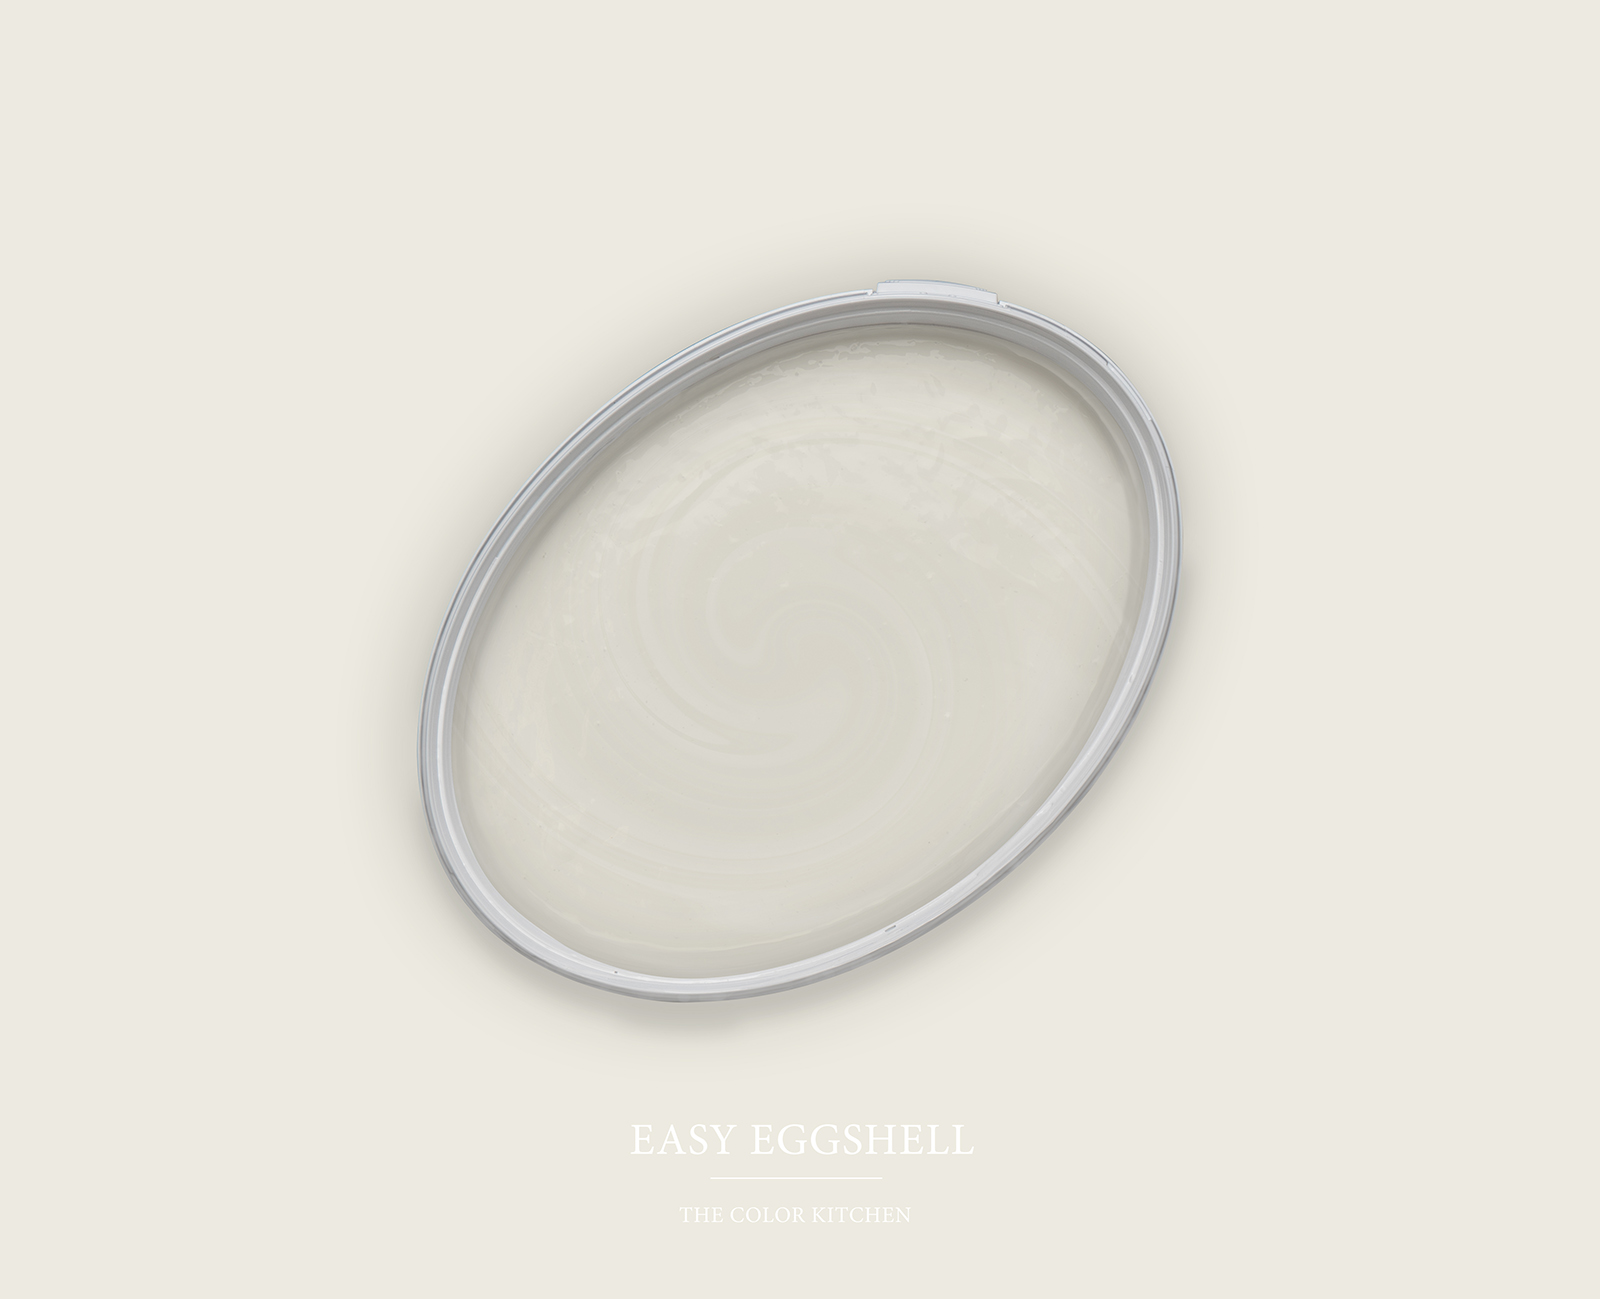         Wandfarbe TCK1001 »Easy Eggshell« in beruhigender Eierschale – 2,5 Liter
    